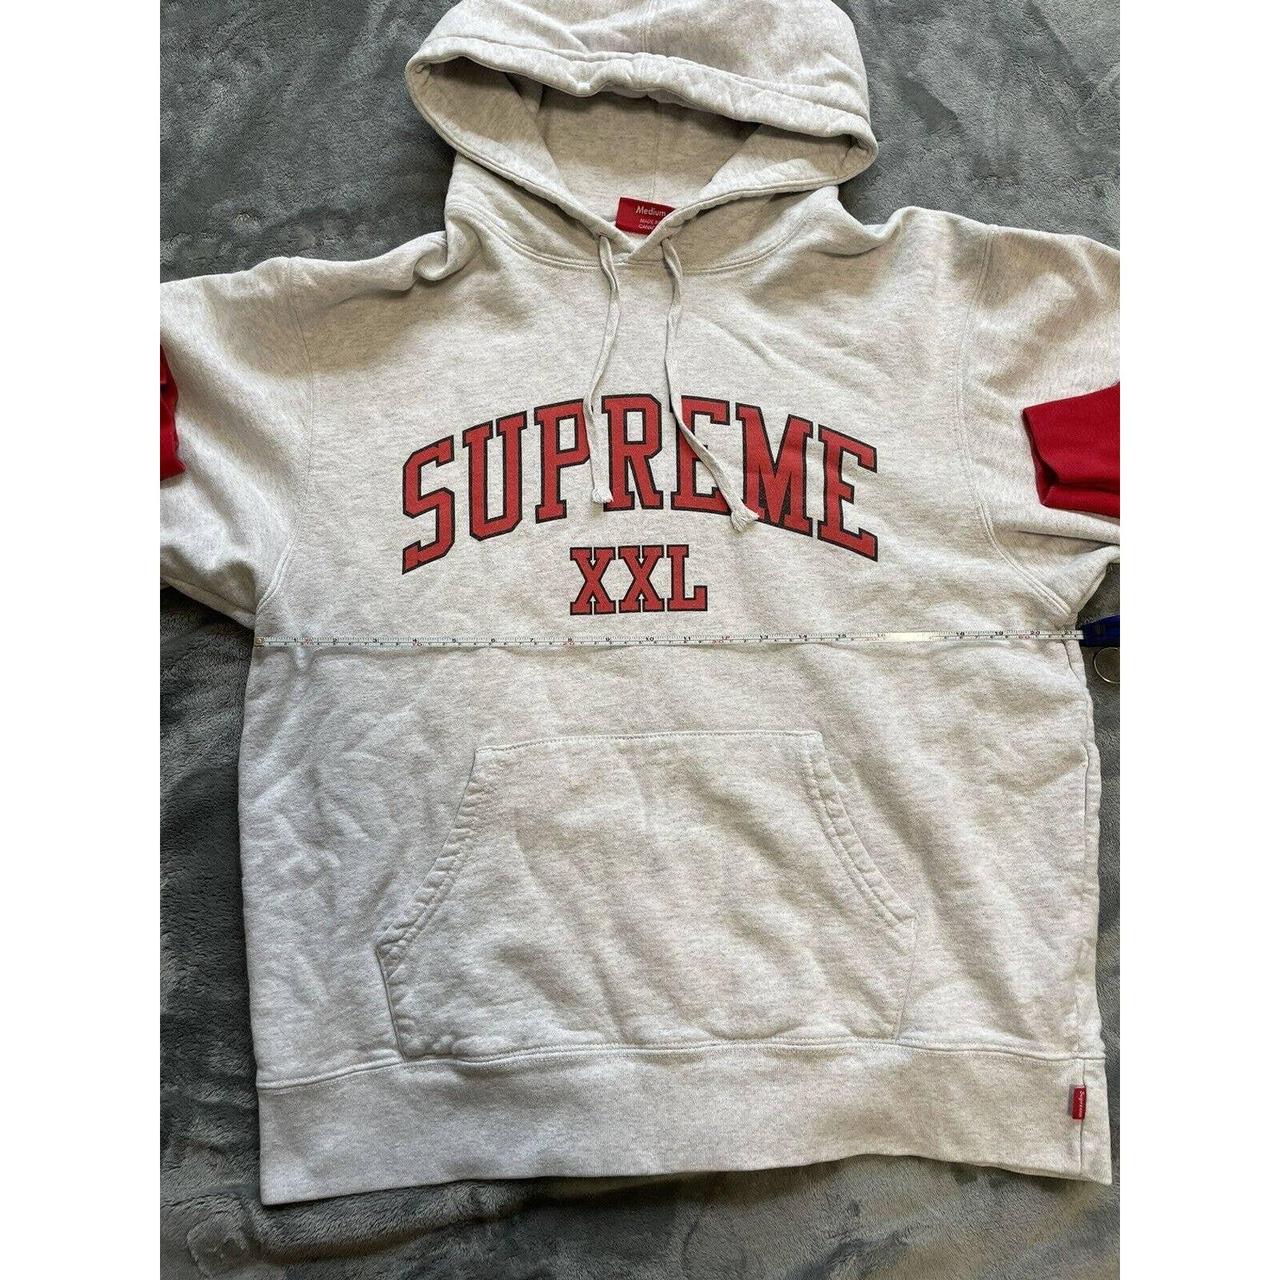 Supreme XXL Hoodie Sweatshirt Gray/ Red Spell Out... - Depop